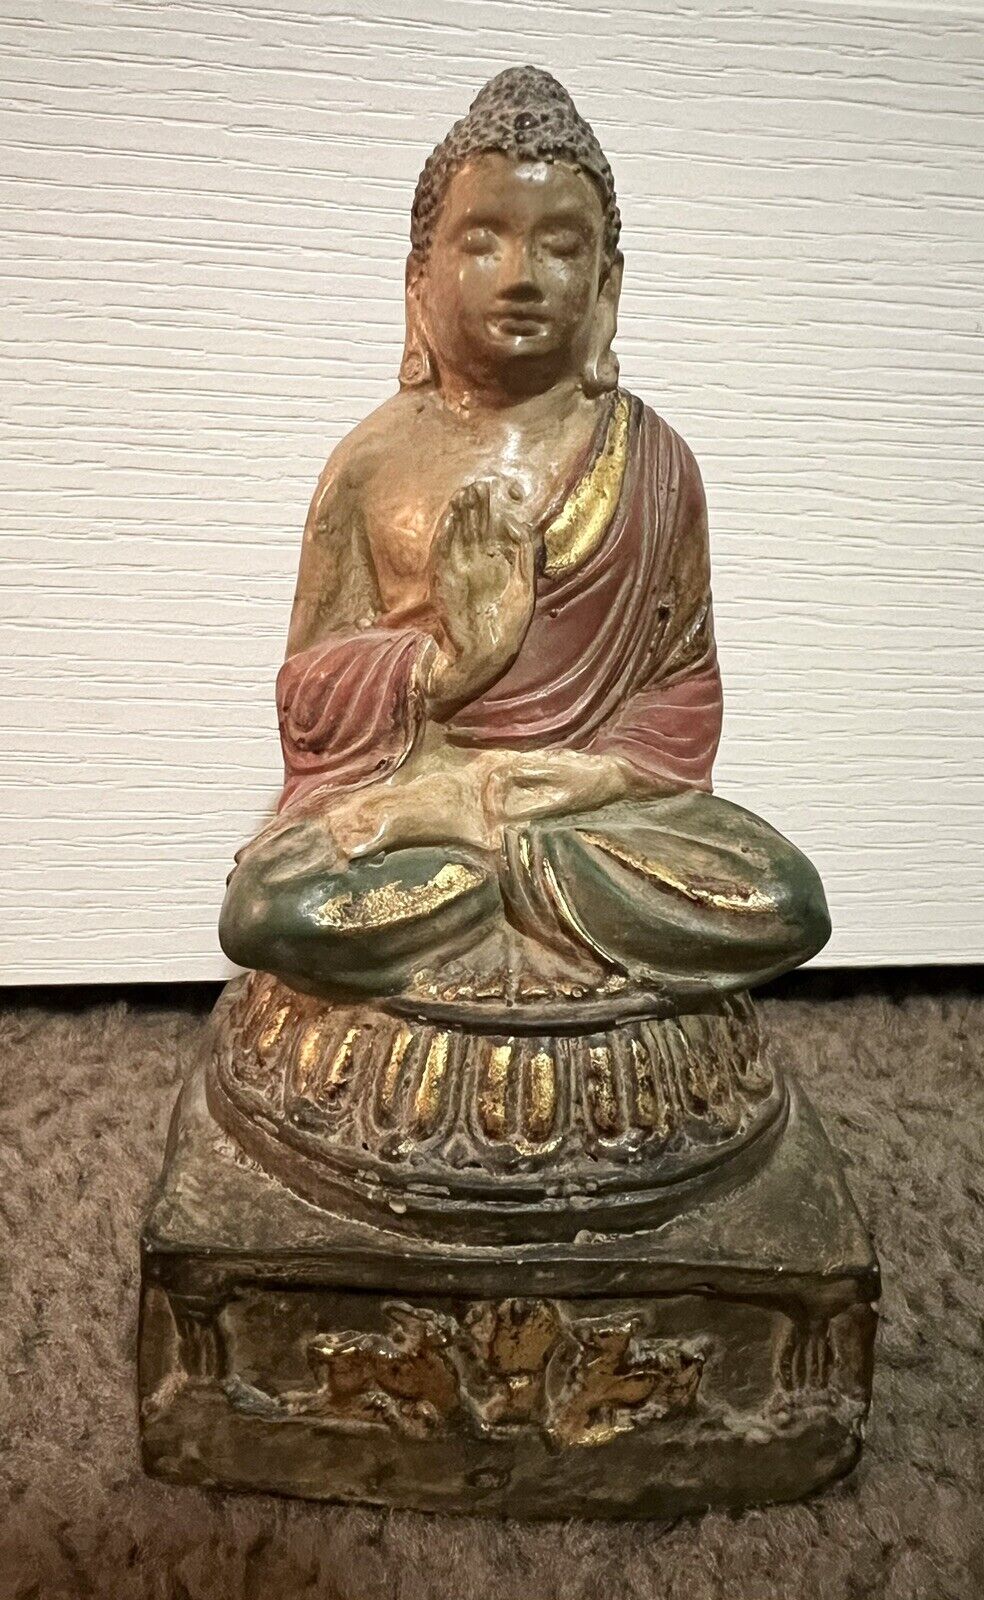 Buddha Statue Figurine for Home Decor Zen Sitting Meditating Sculpture Buddhism